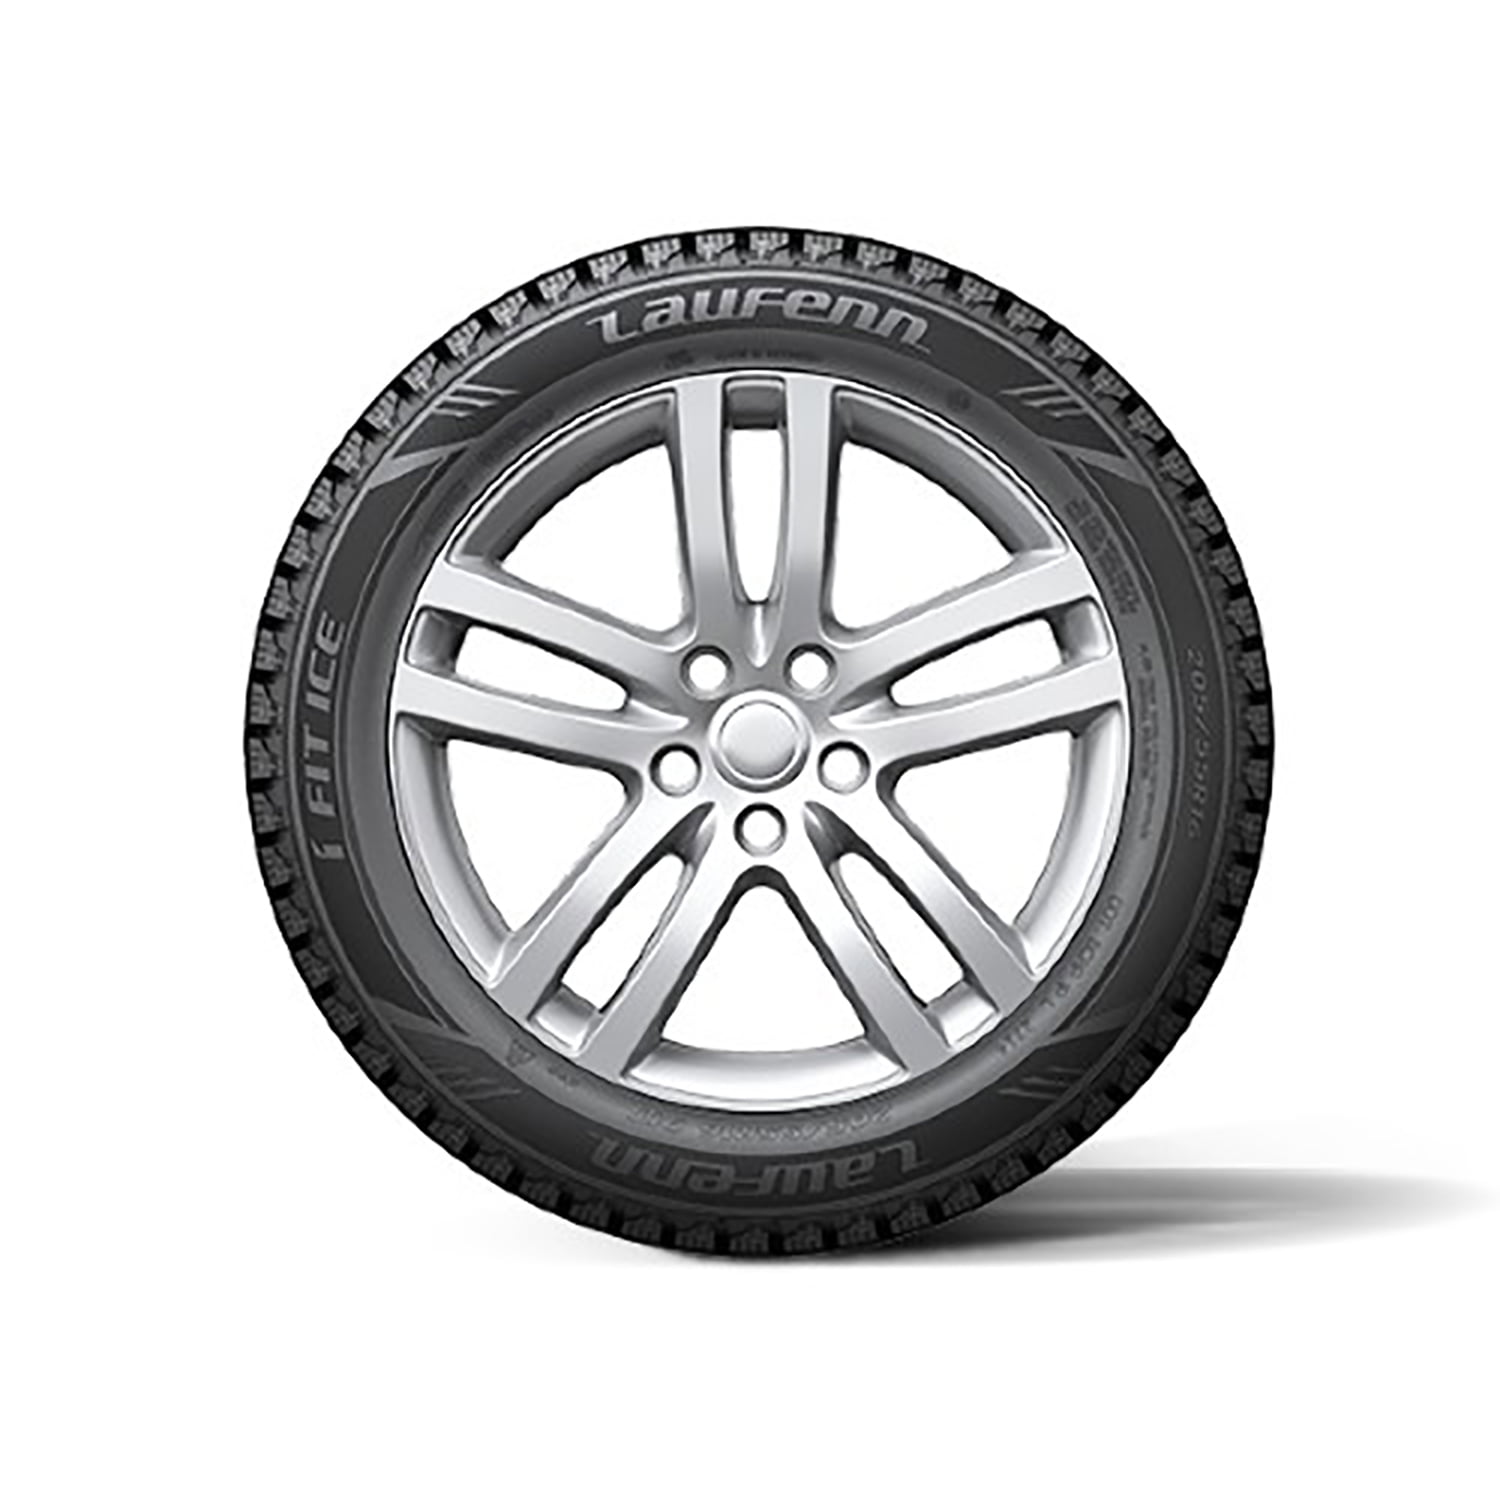 Laufenn I FIT ICE LW Winter R T Passenger Tire Fits:   Ford Fiesta SE,  Dodge Neon ACR